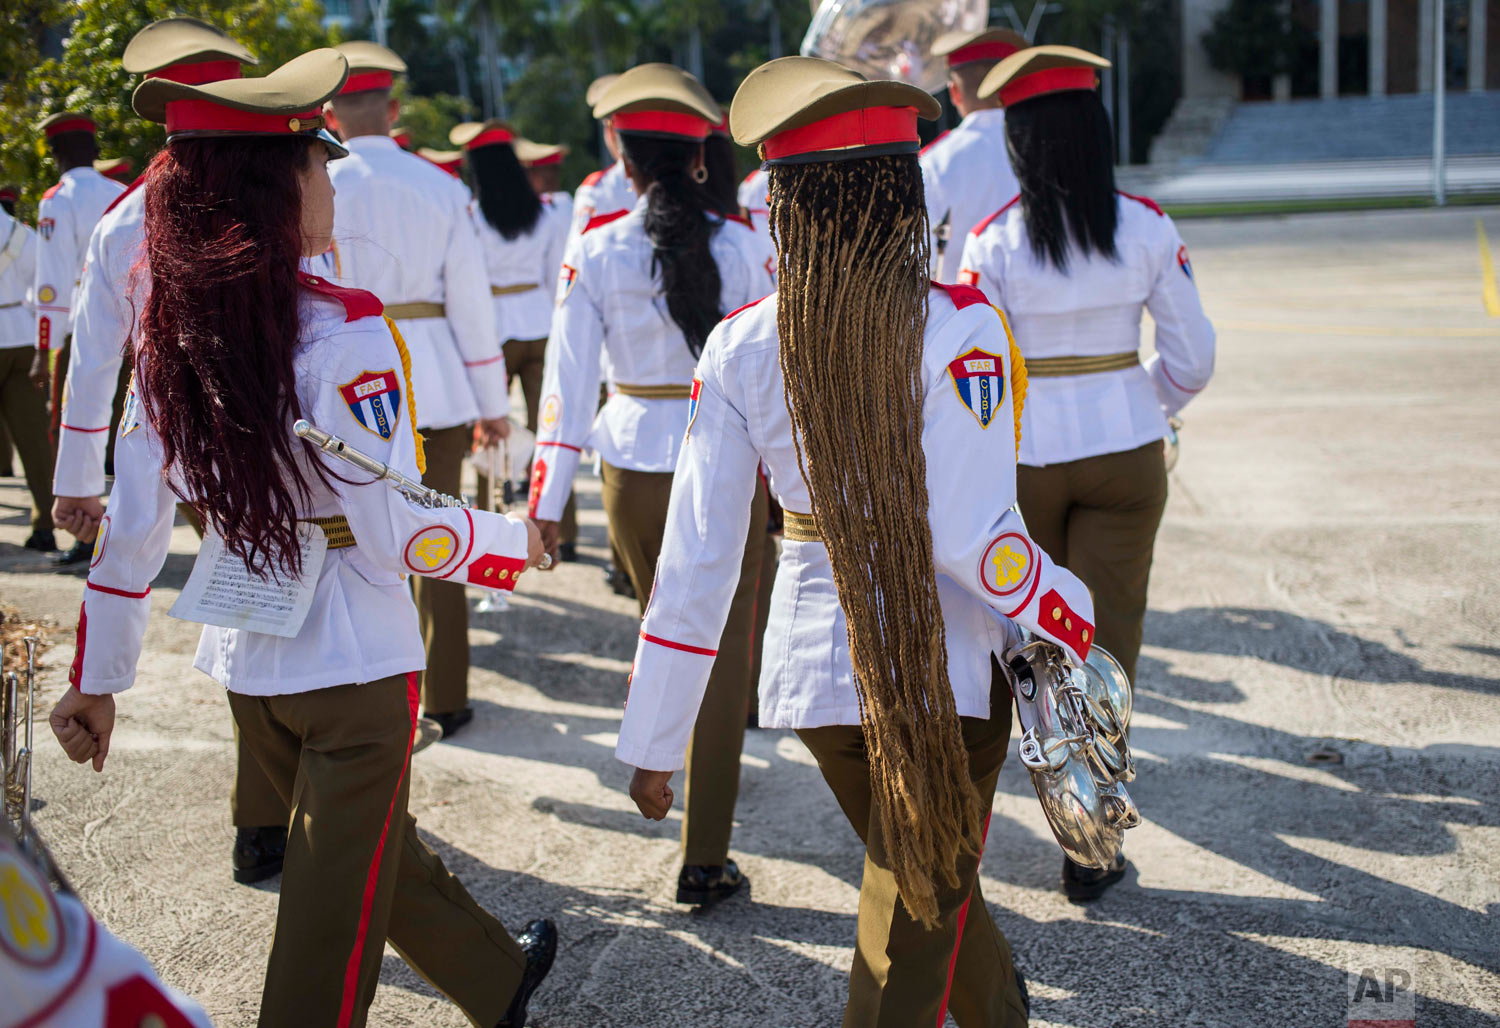  The honor guard military band marches after the arrival of El Salvador's President Salvador Sanchez Ceren at Revolution Square in Havana, Cuba, Oct. 25, 2018. (AP Photo/Desmond Boylan) 